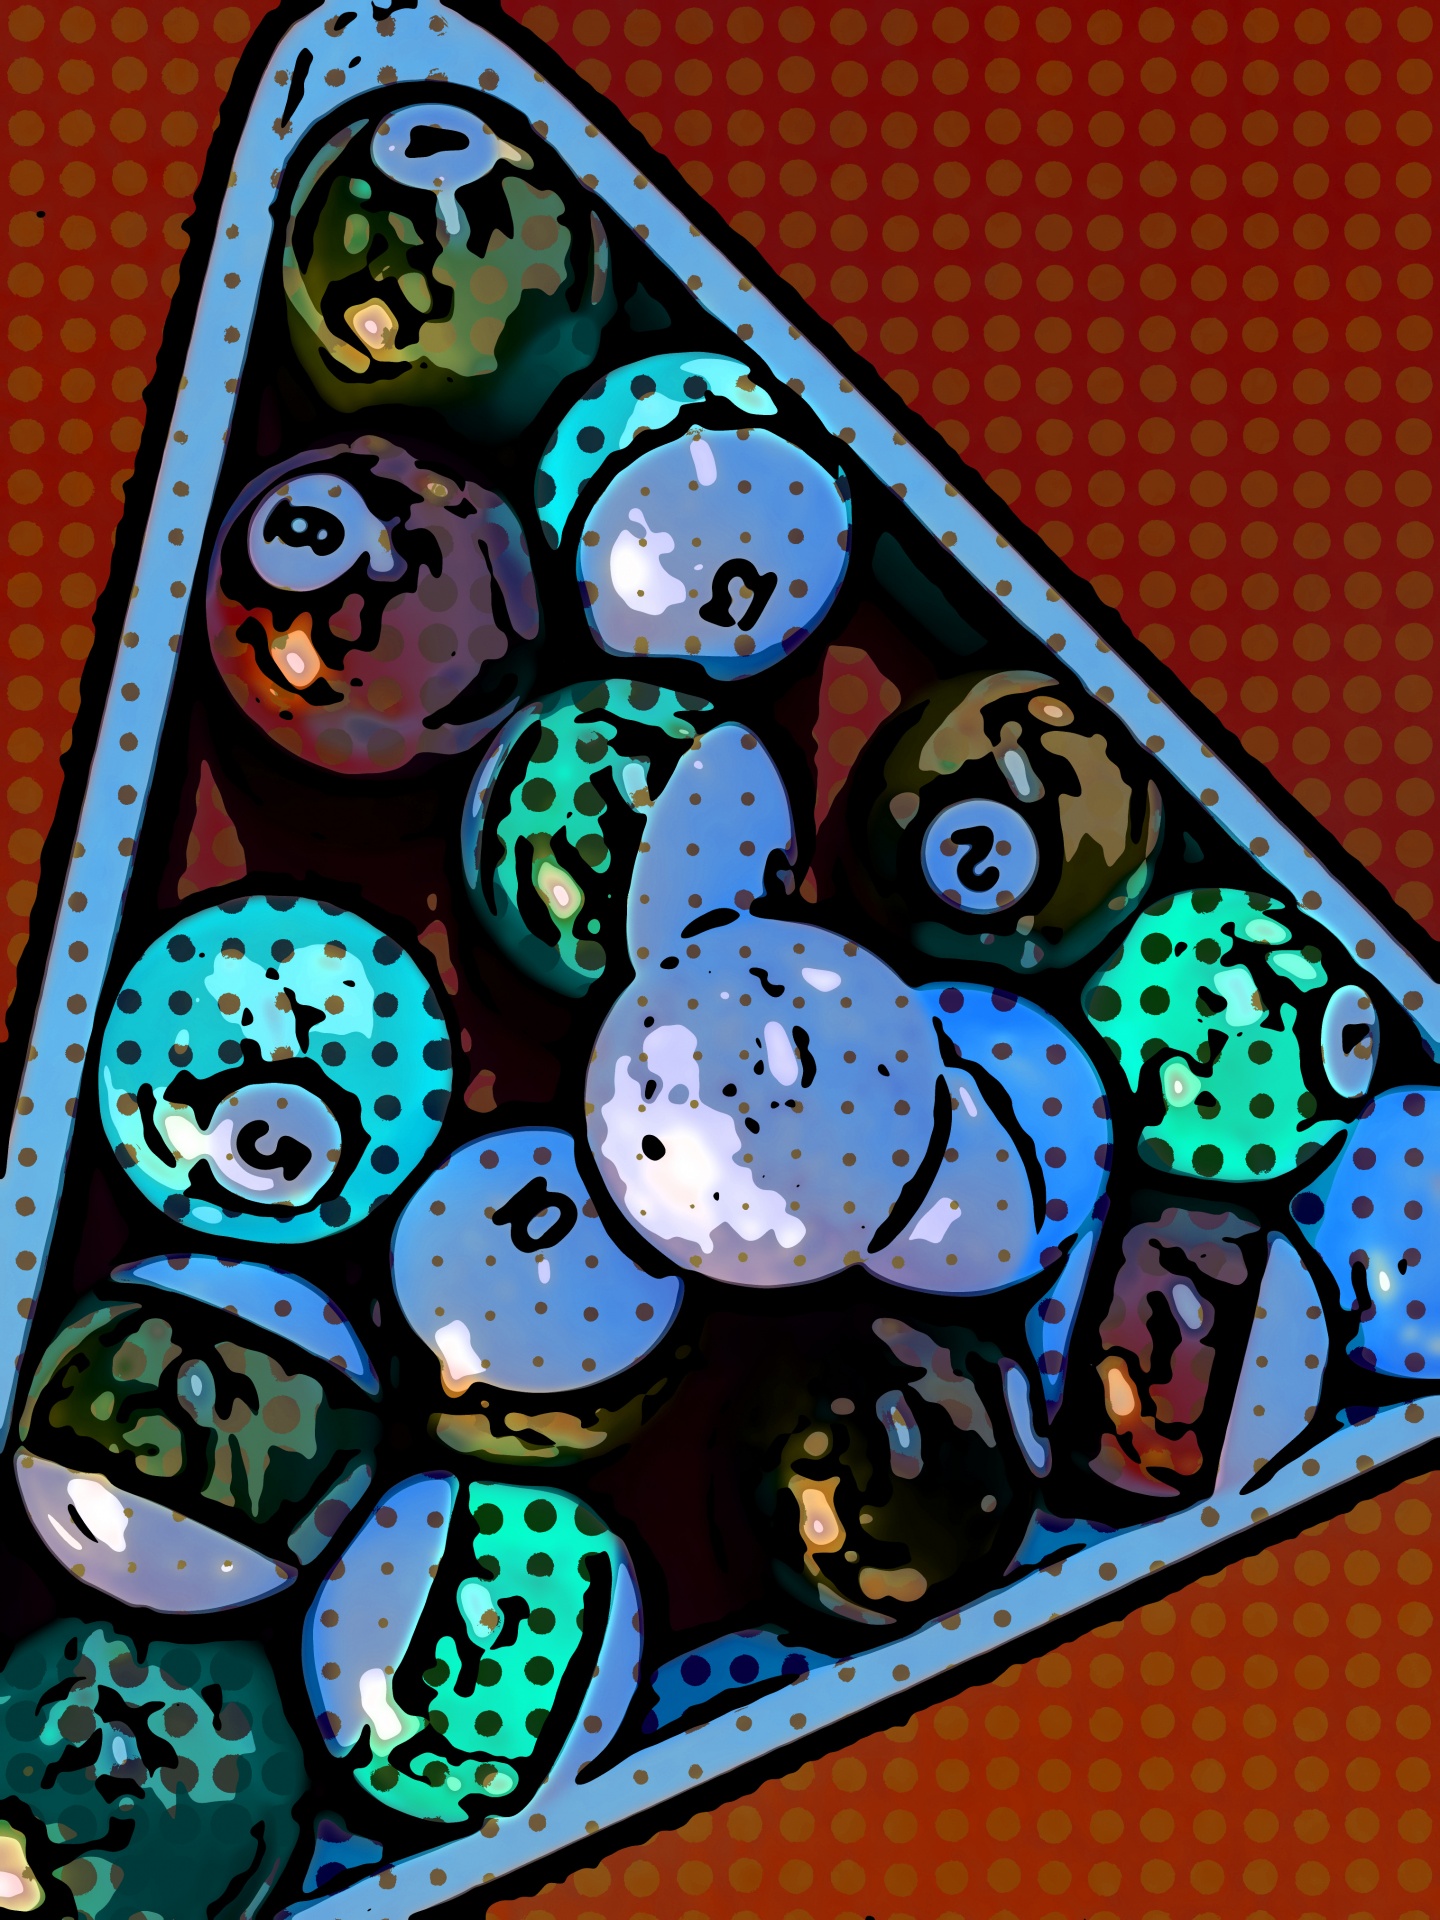 artistic rendering of pool table balls